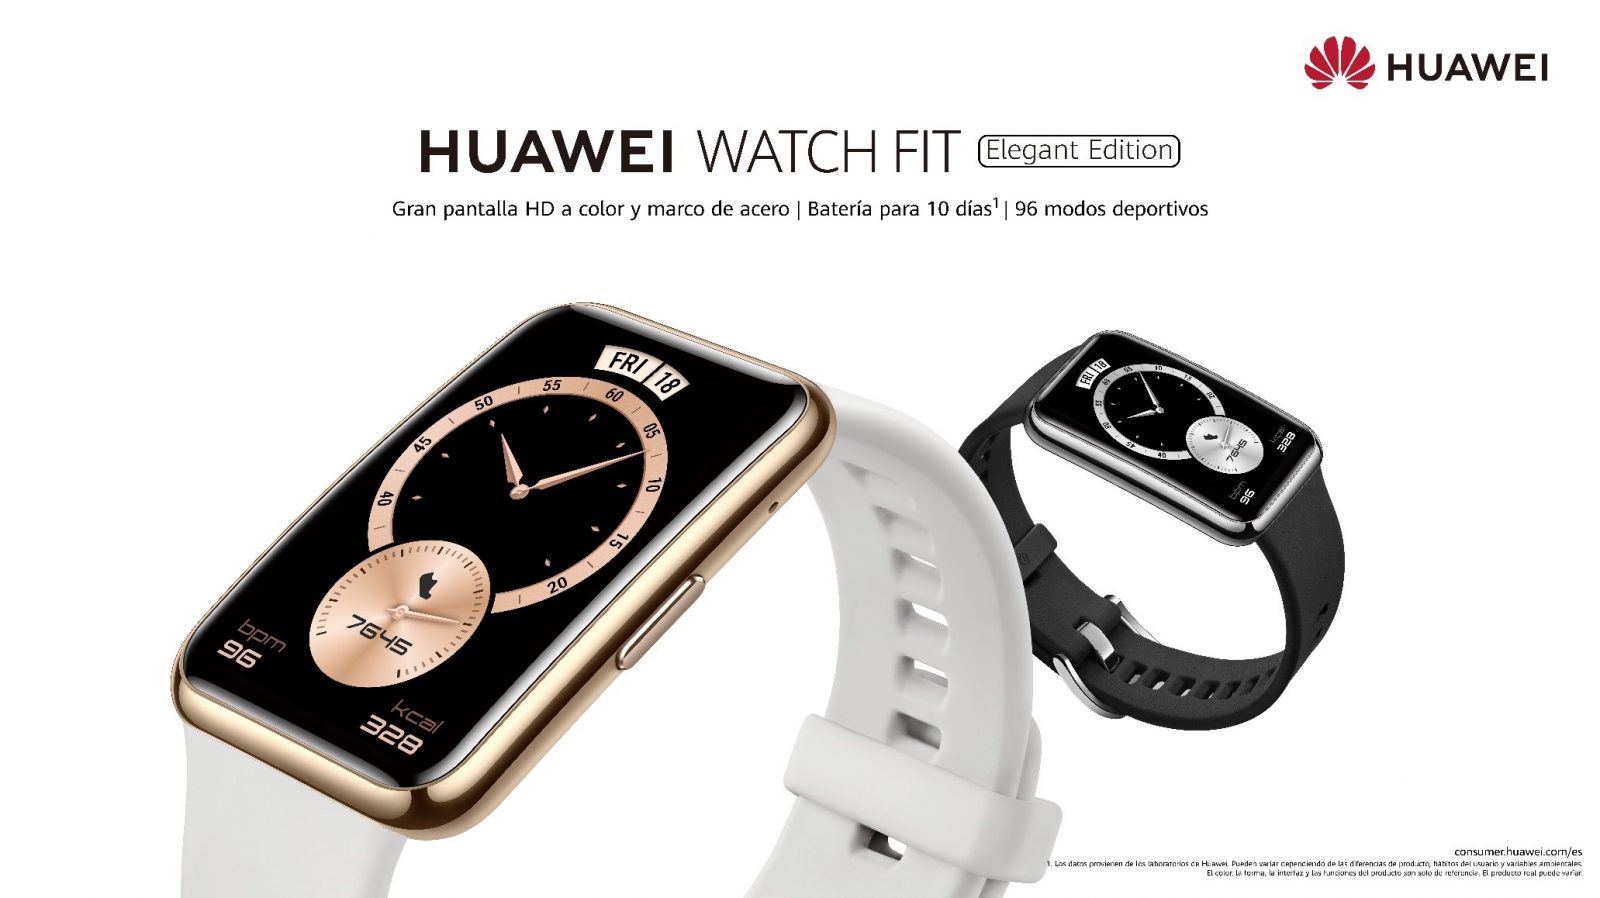 Huawei lanza su smartwatch Huawei Watch GT 4, que combina estilo y fitness